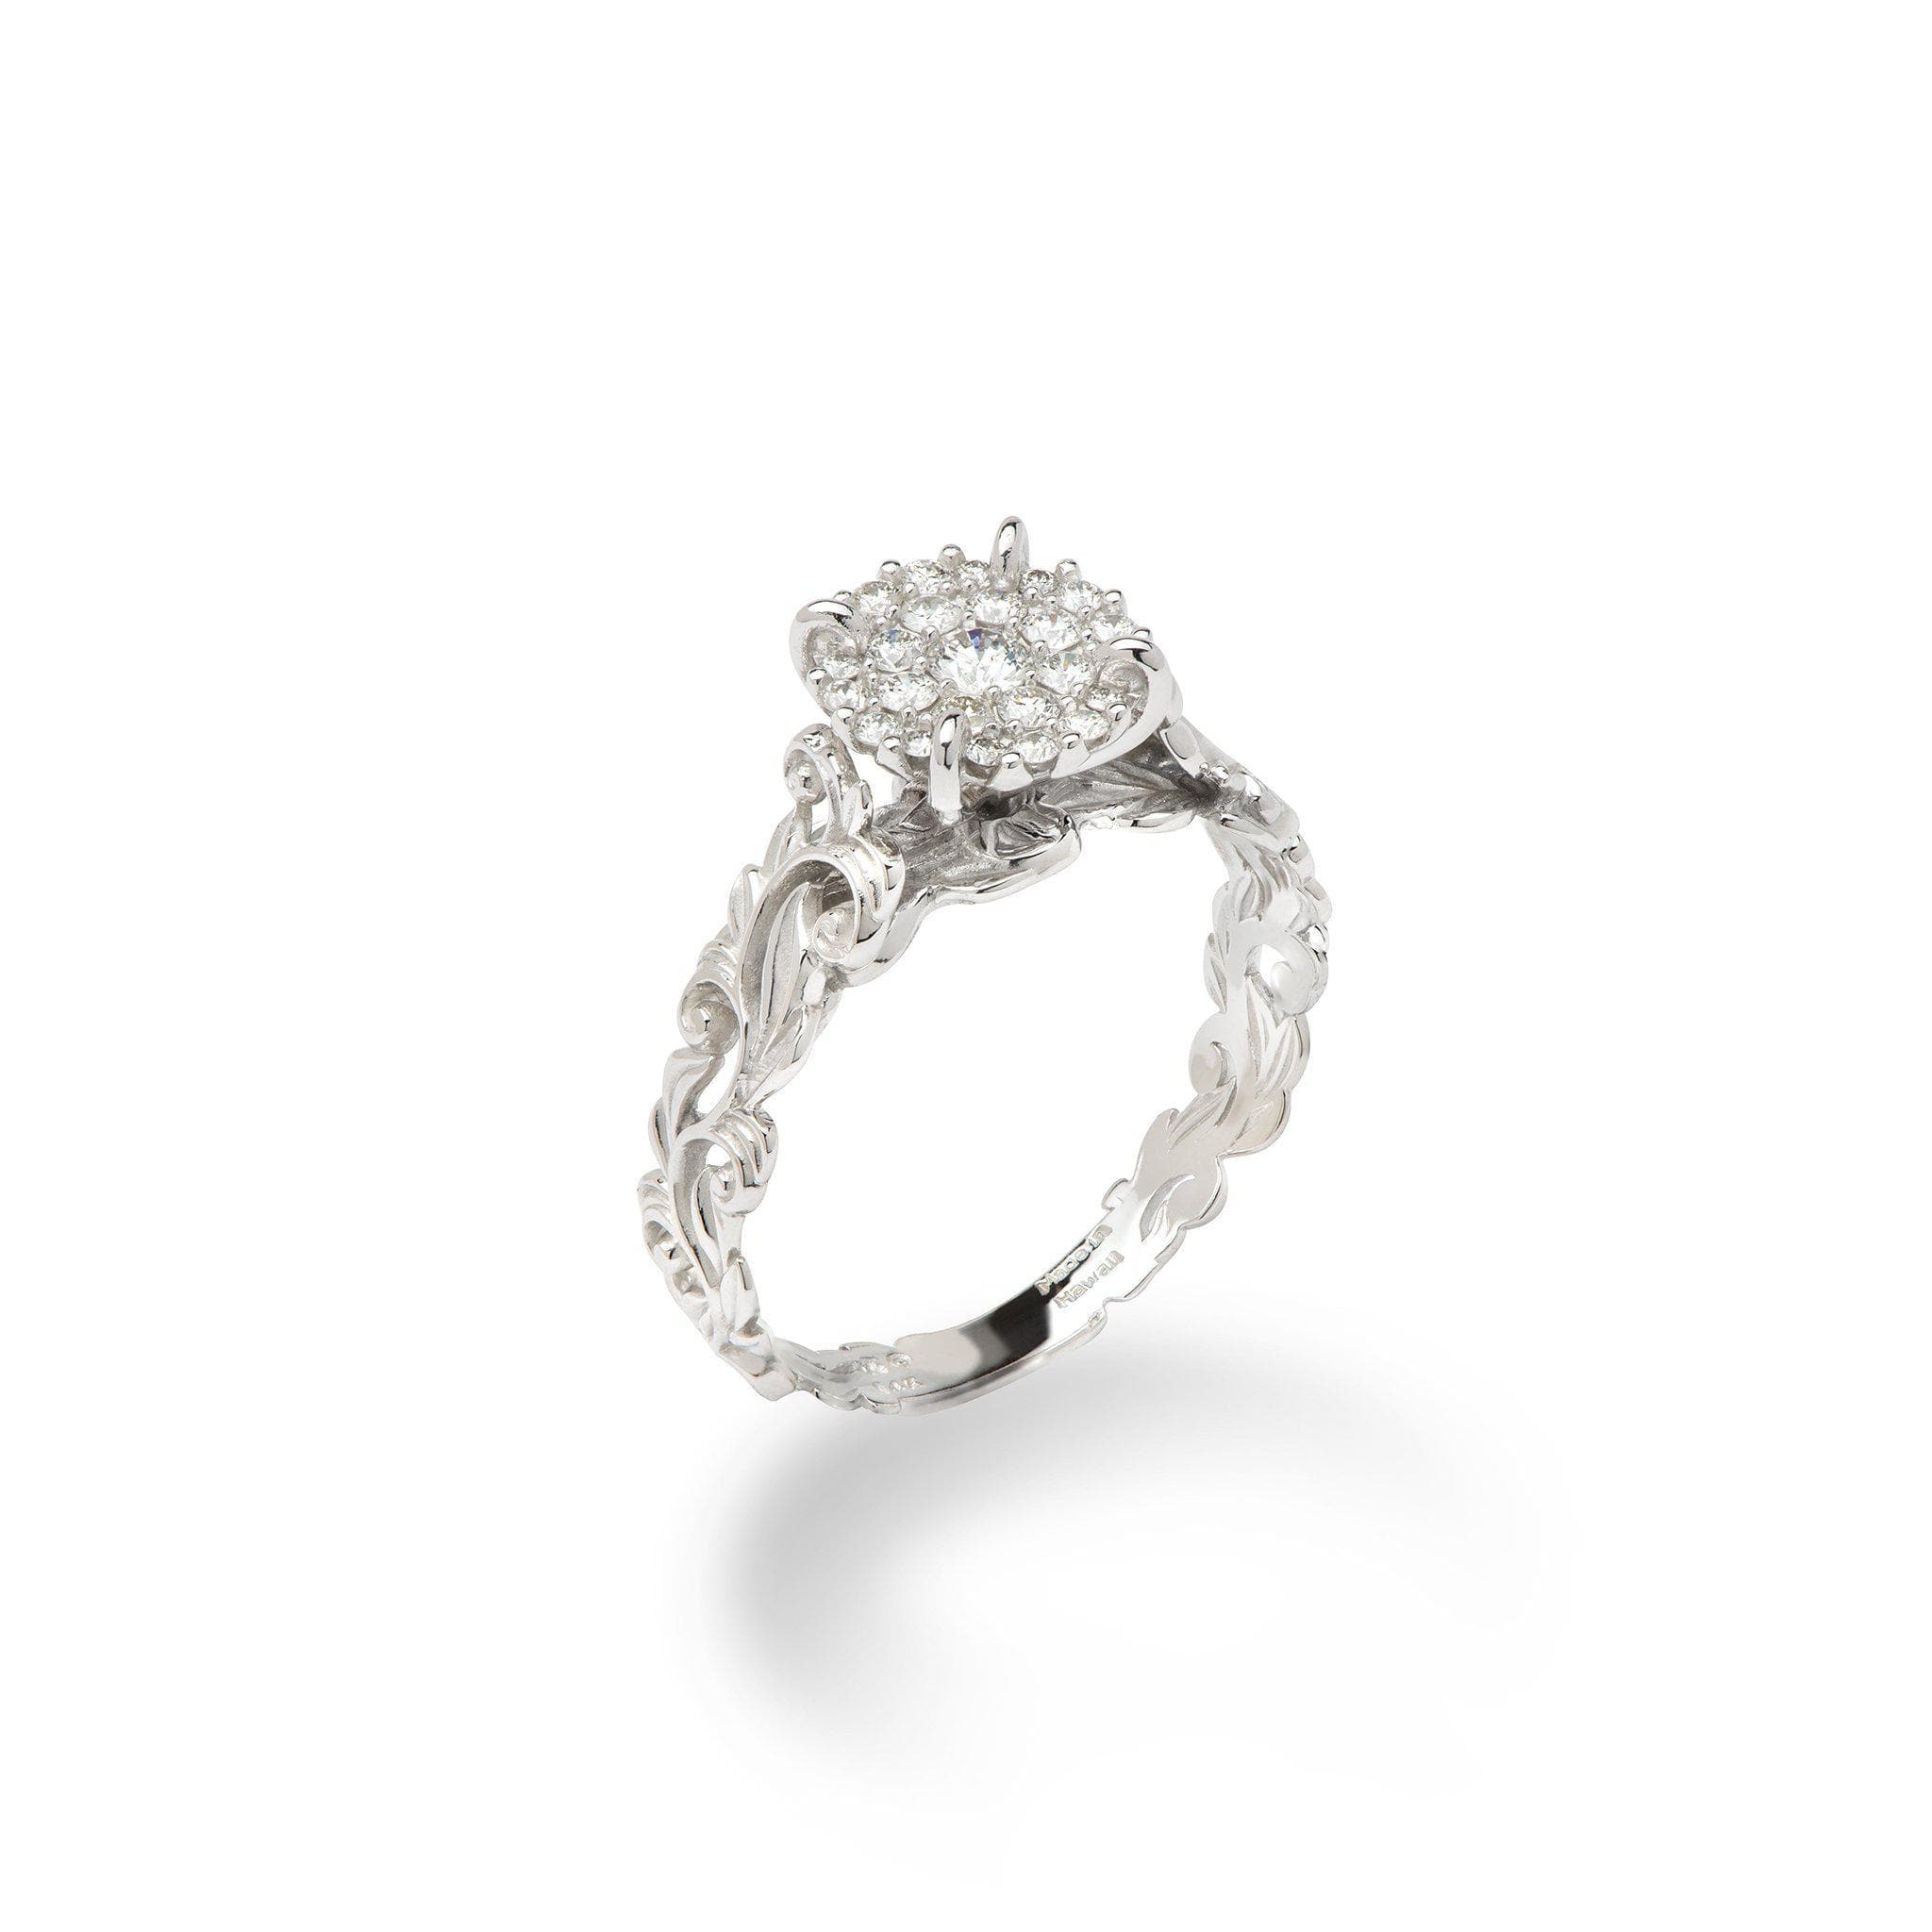 Hawaiian Heirloom Engagement Ring with Diamonds in 14K